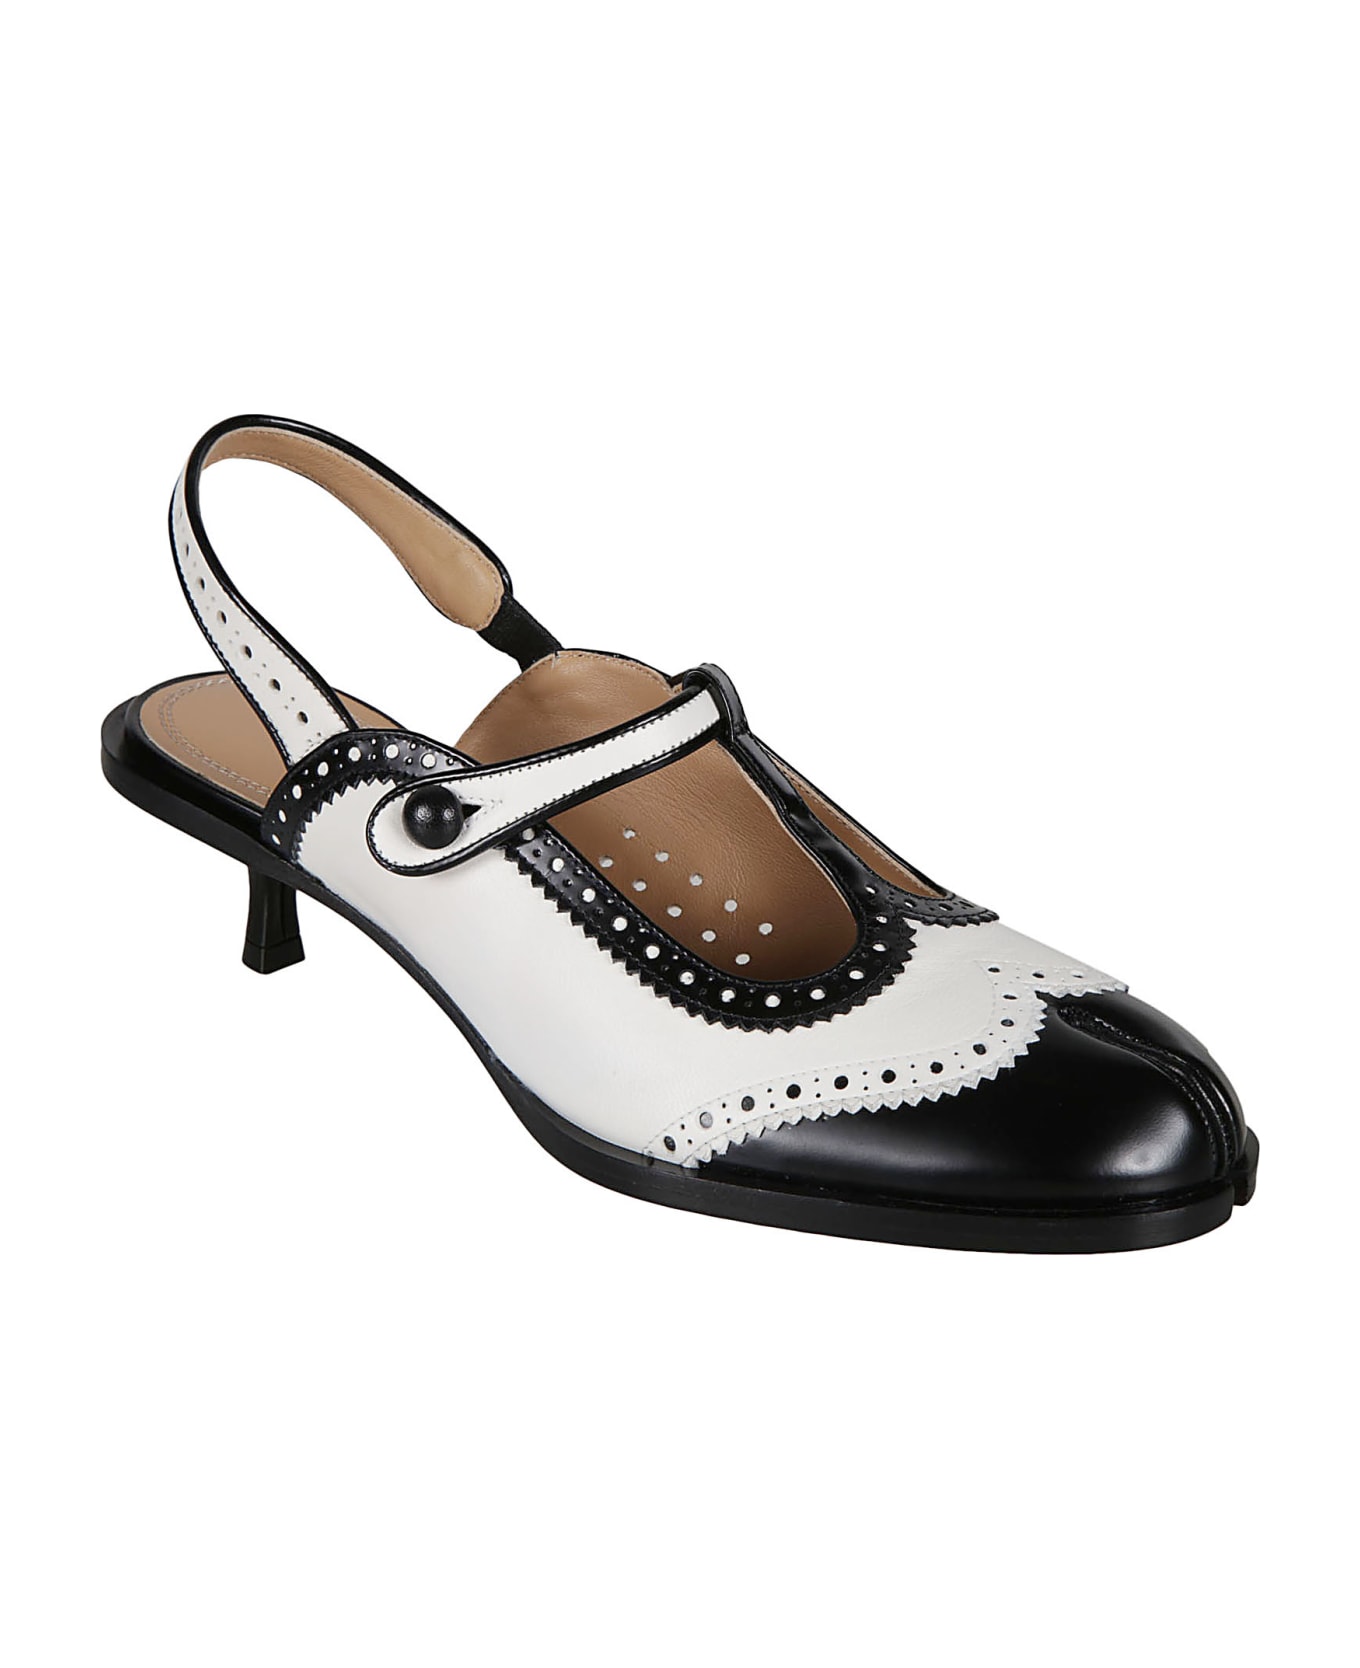 Maison Margiela Bacl Strap Cleft Toe Sandals - white/black サンダル